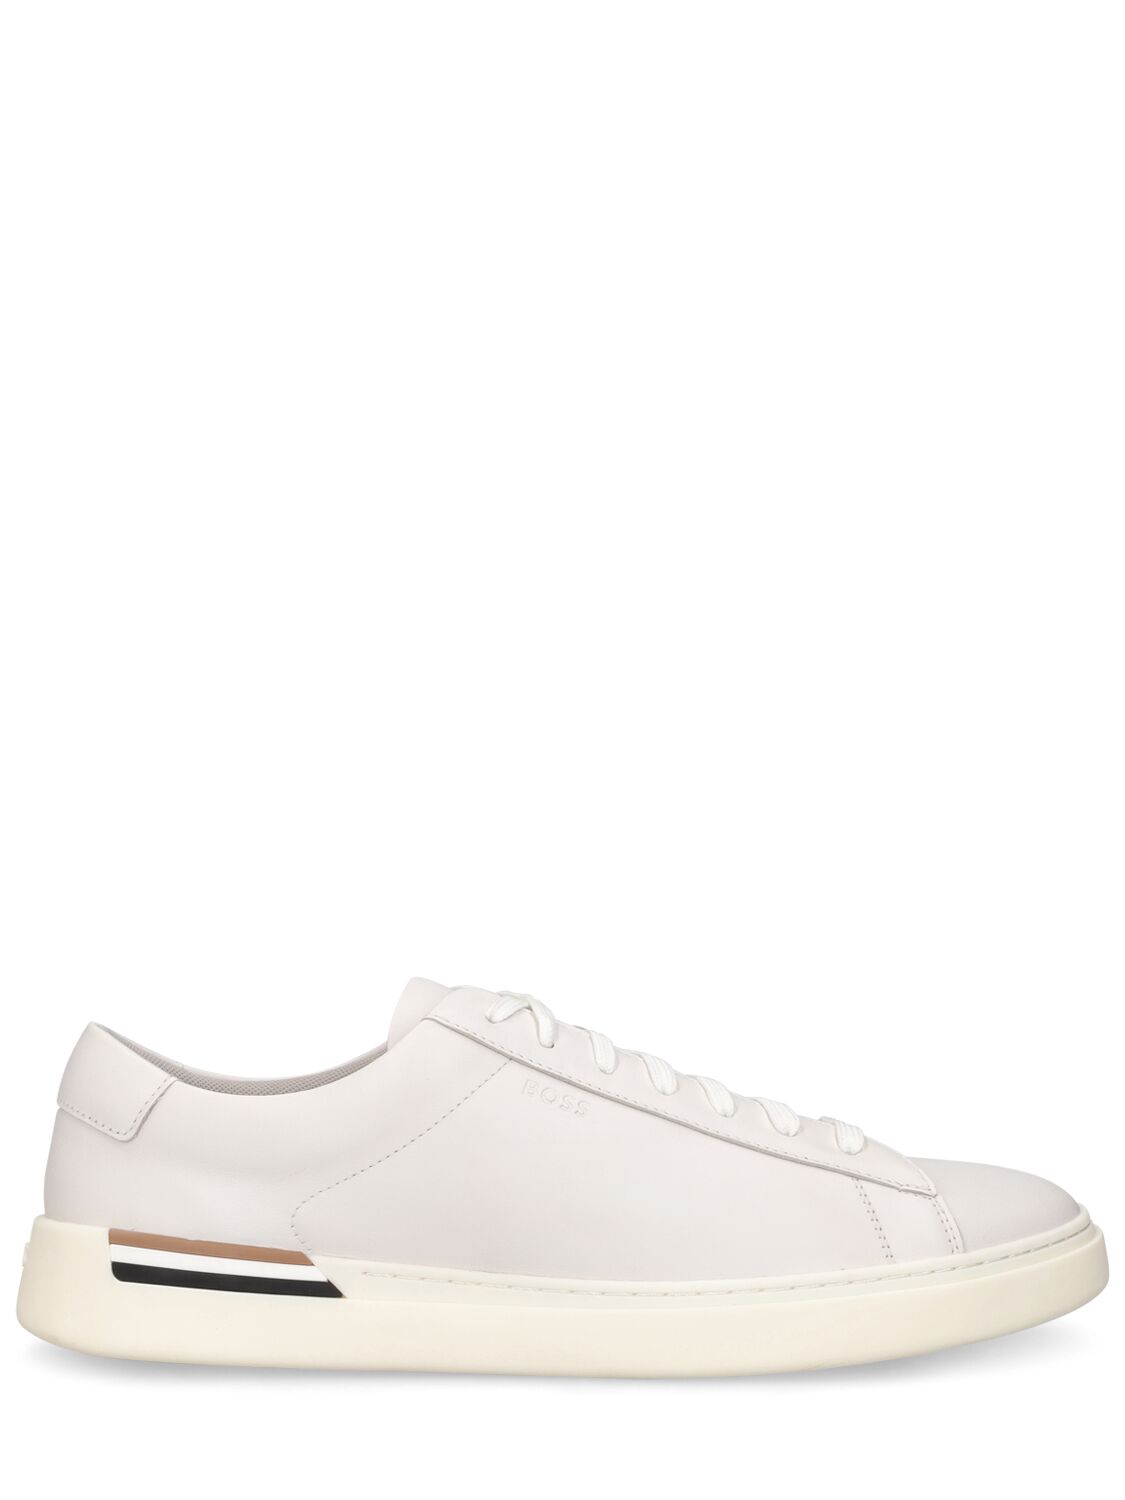 Hugo Boss Clint Tennltt Leather Low Top Sneakers In White